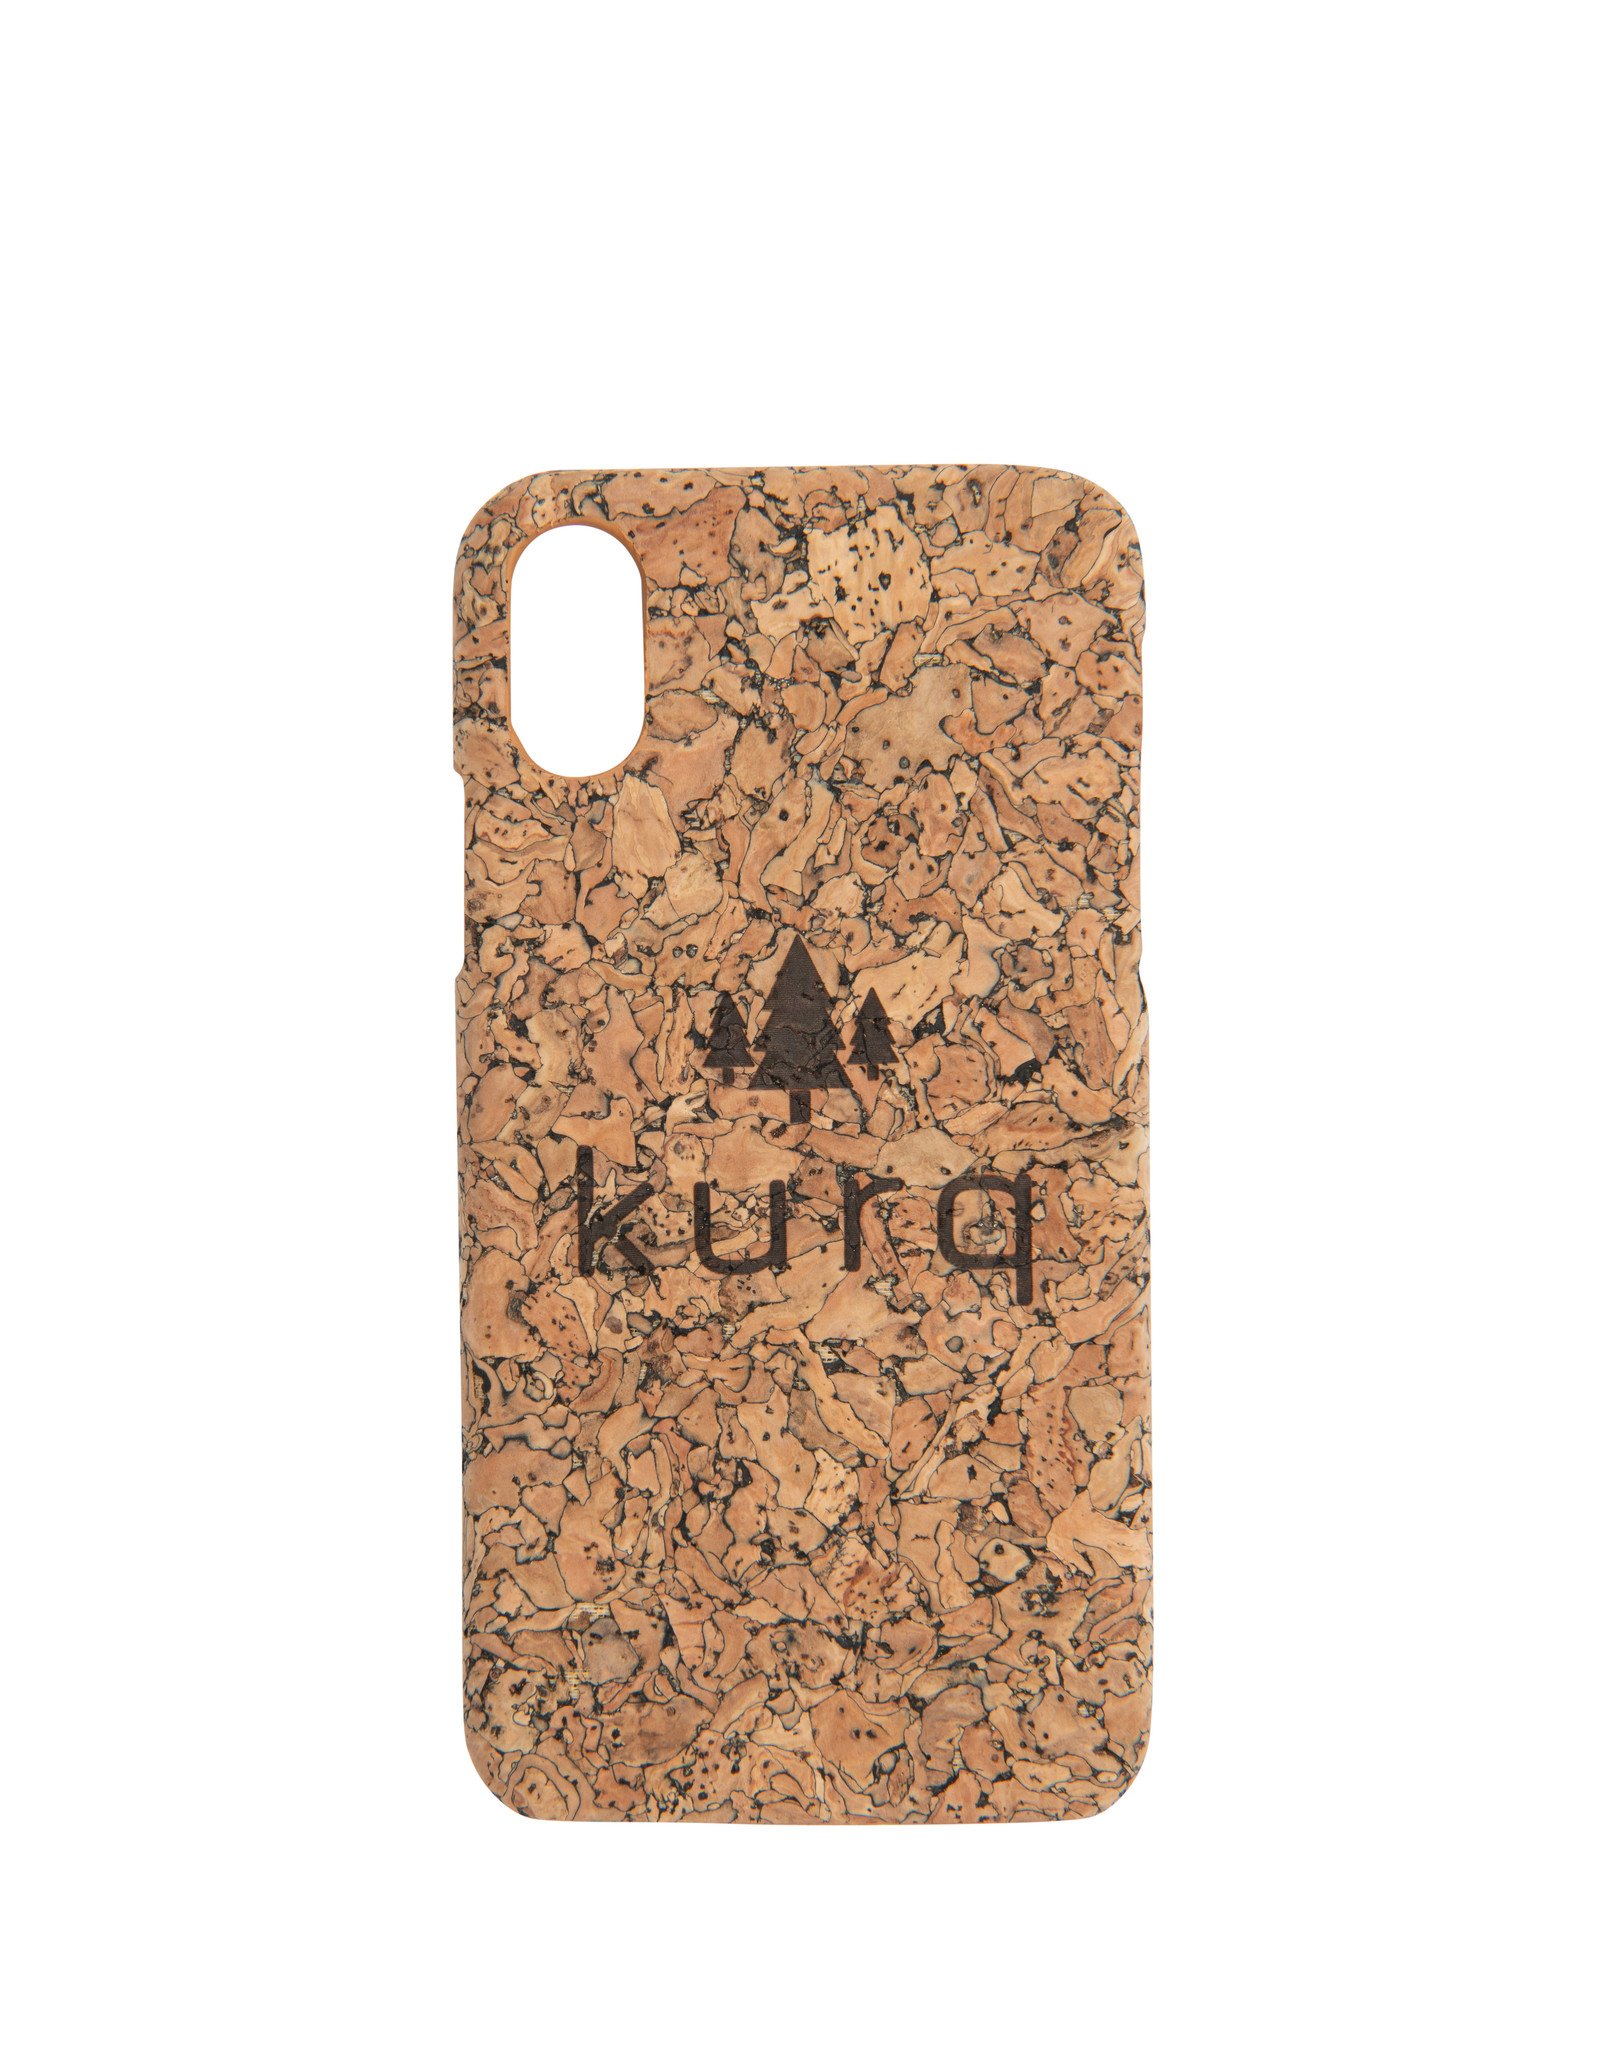 KURQ - Cork phone case for iPhone X/XS